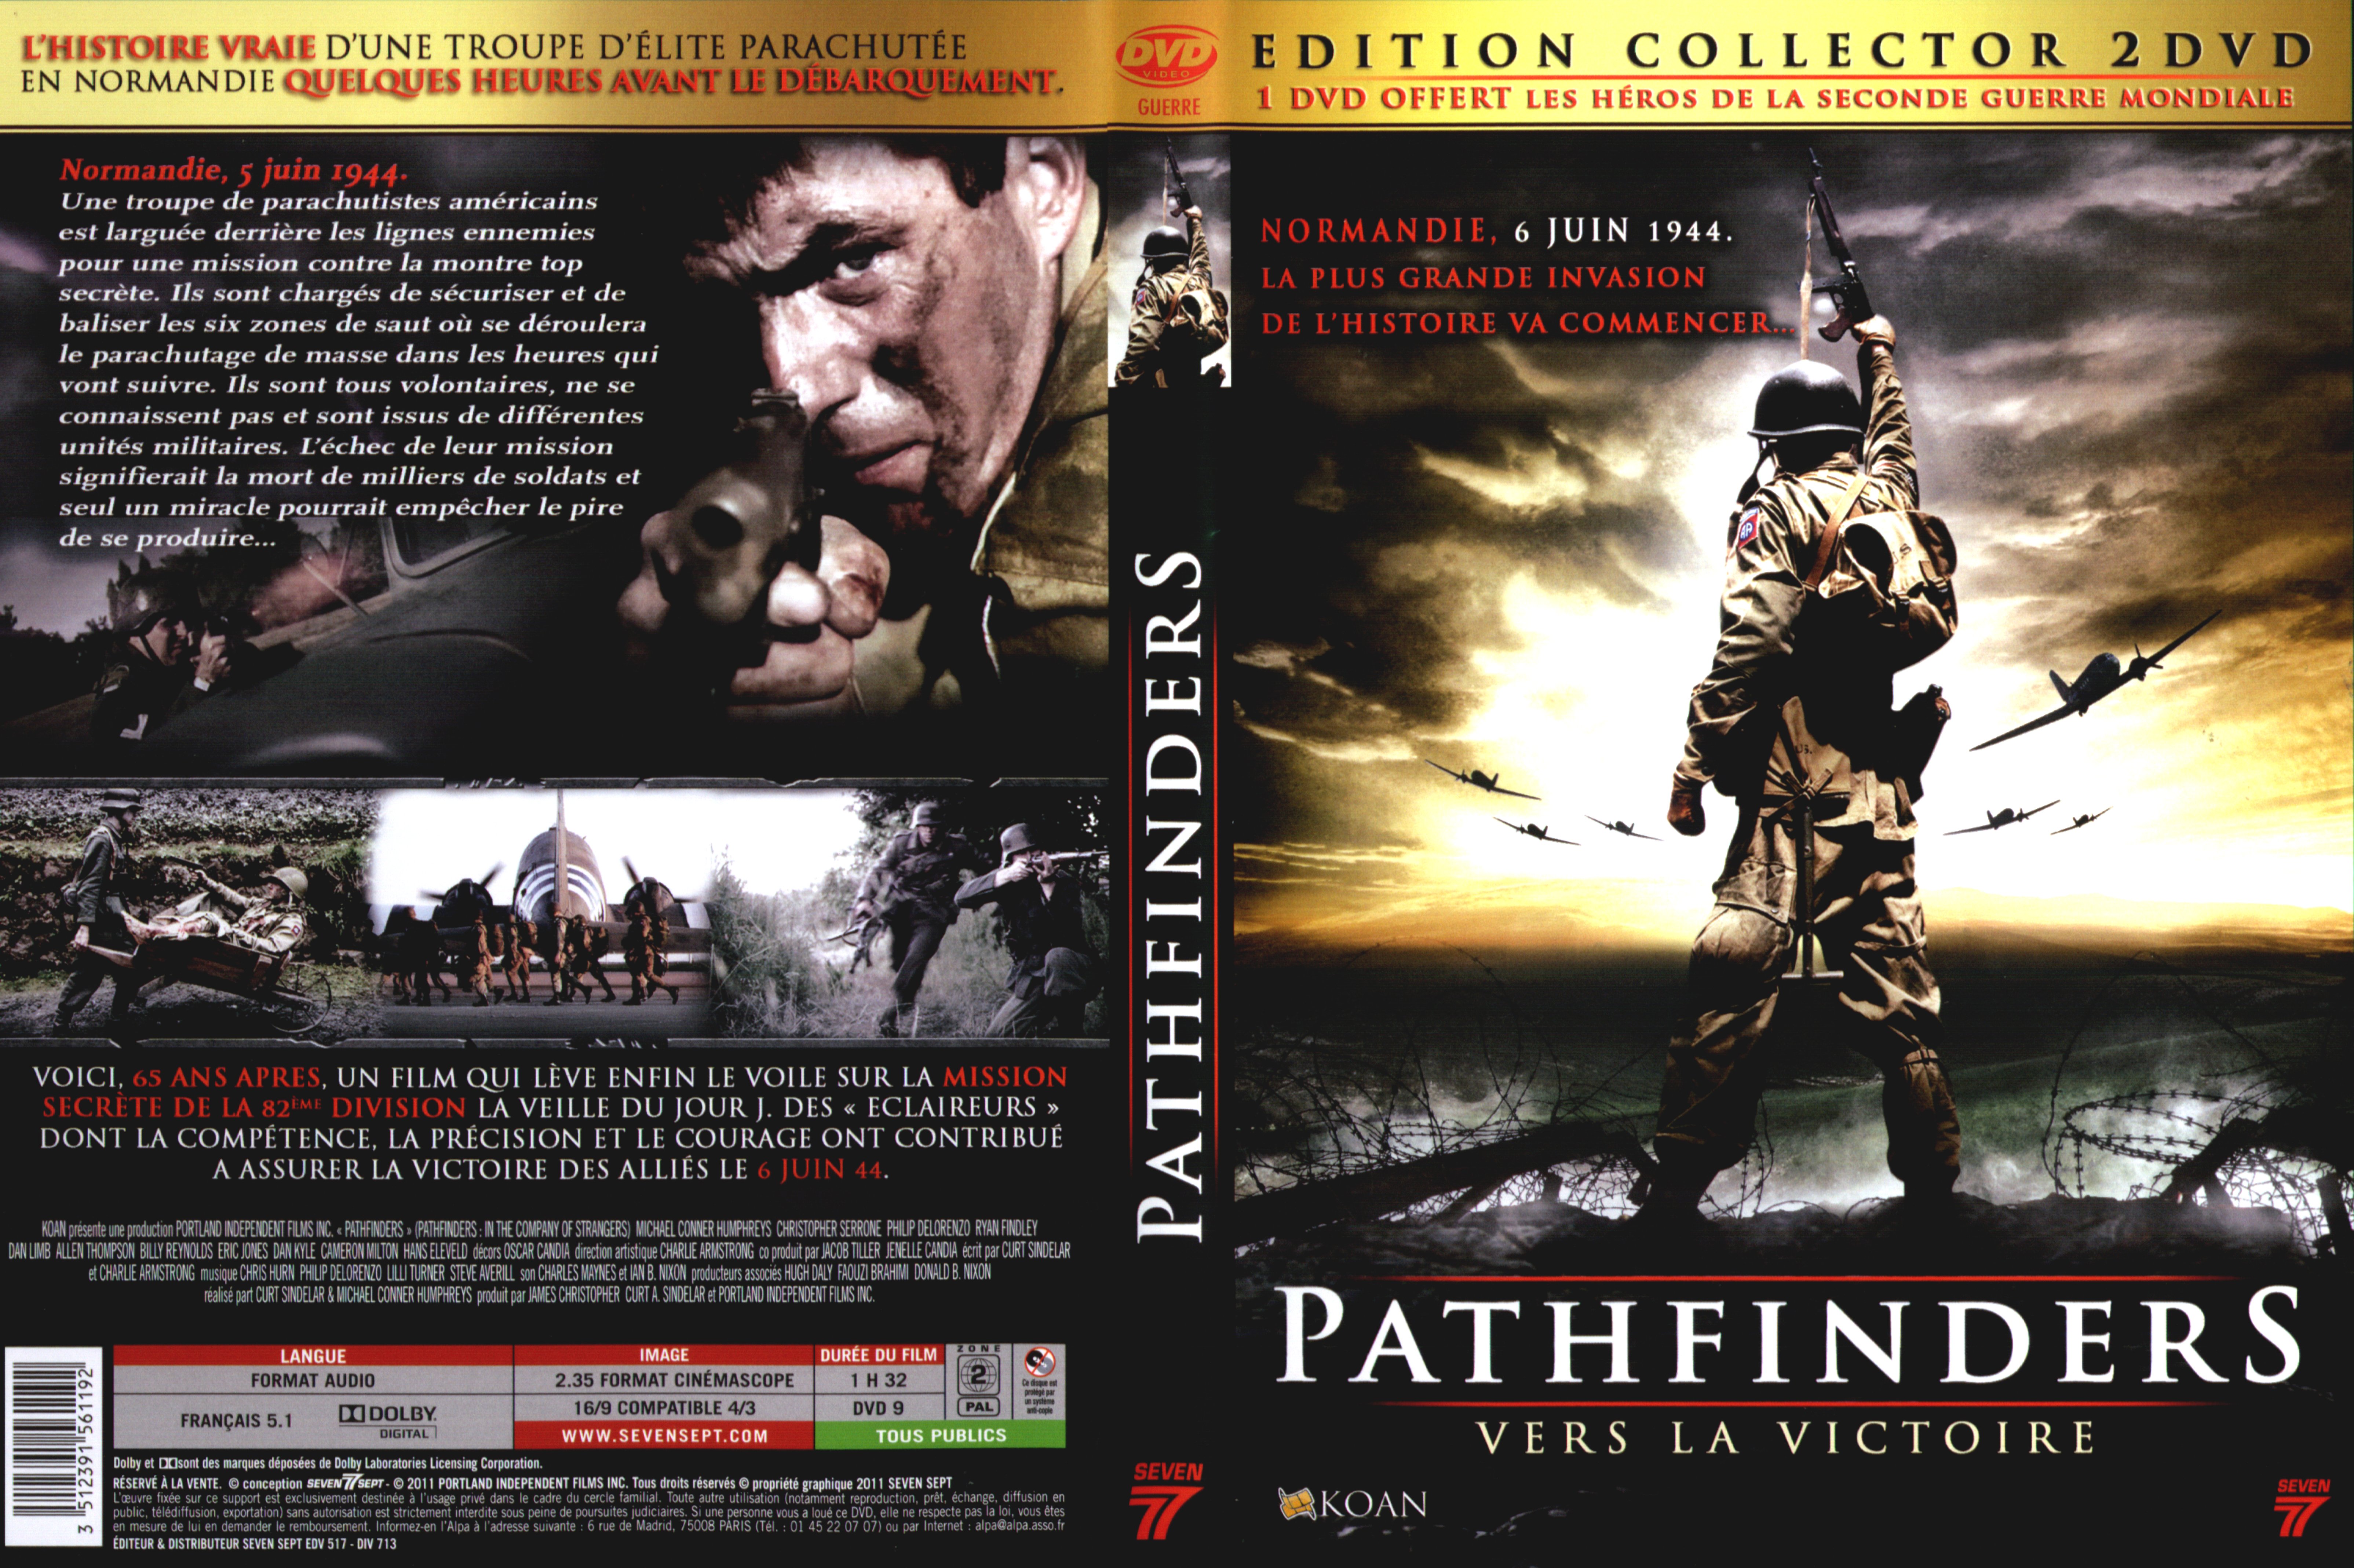 Jaquette DVD Pathfinders vers la victoire